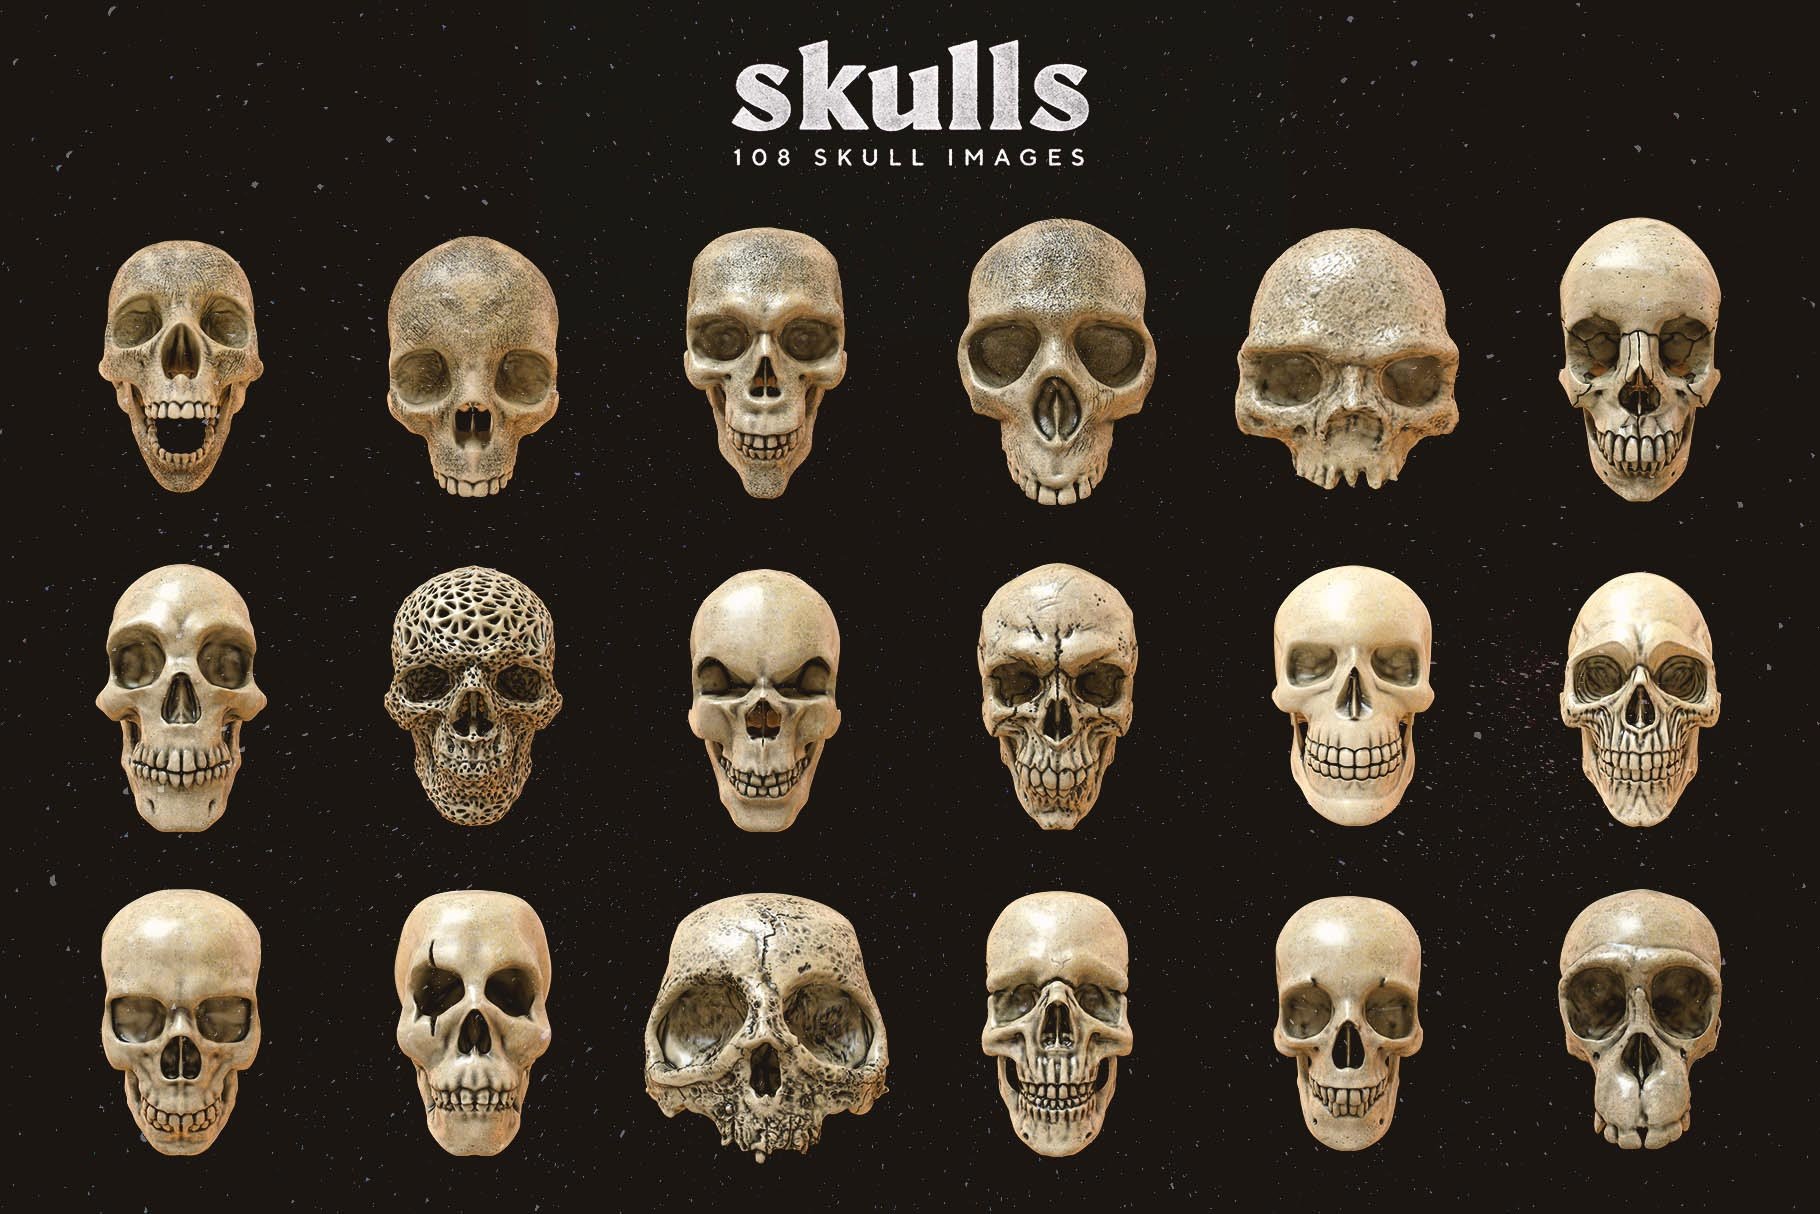 Skulls 108个高分辨率骷髅头骨逼真骨骼金属纹理PNG素材 图片素材 第6张